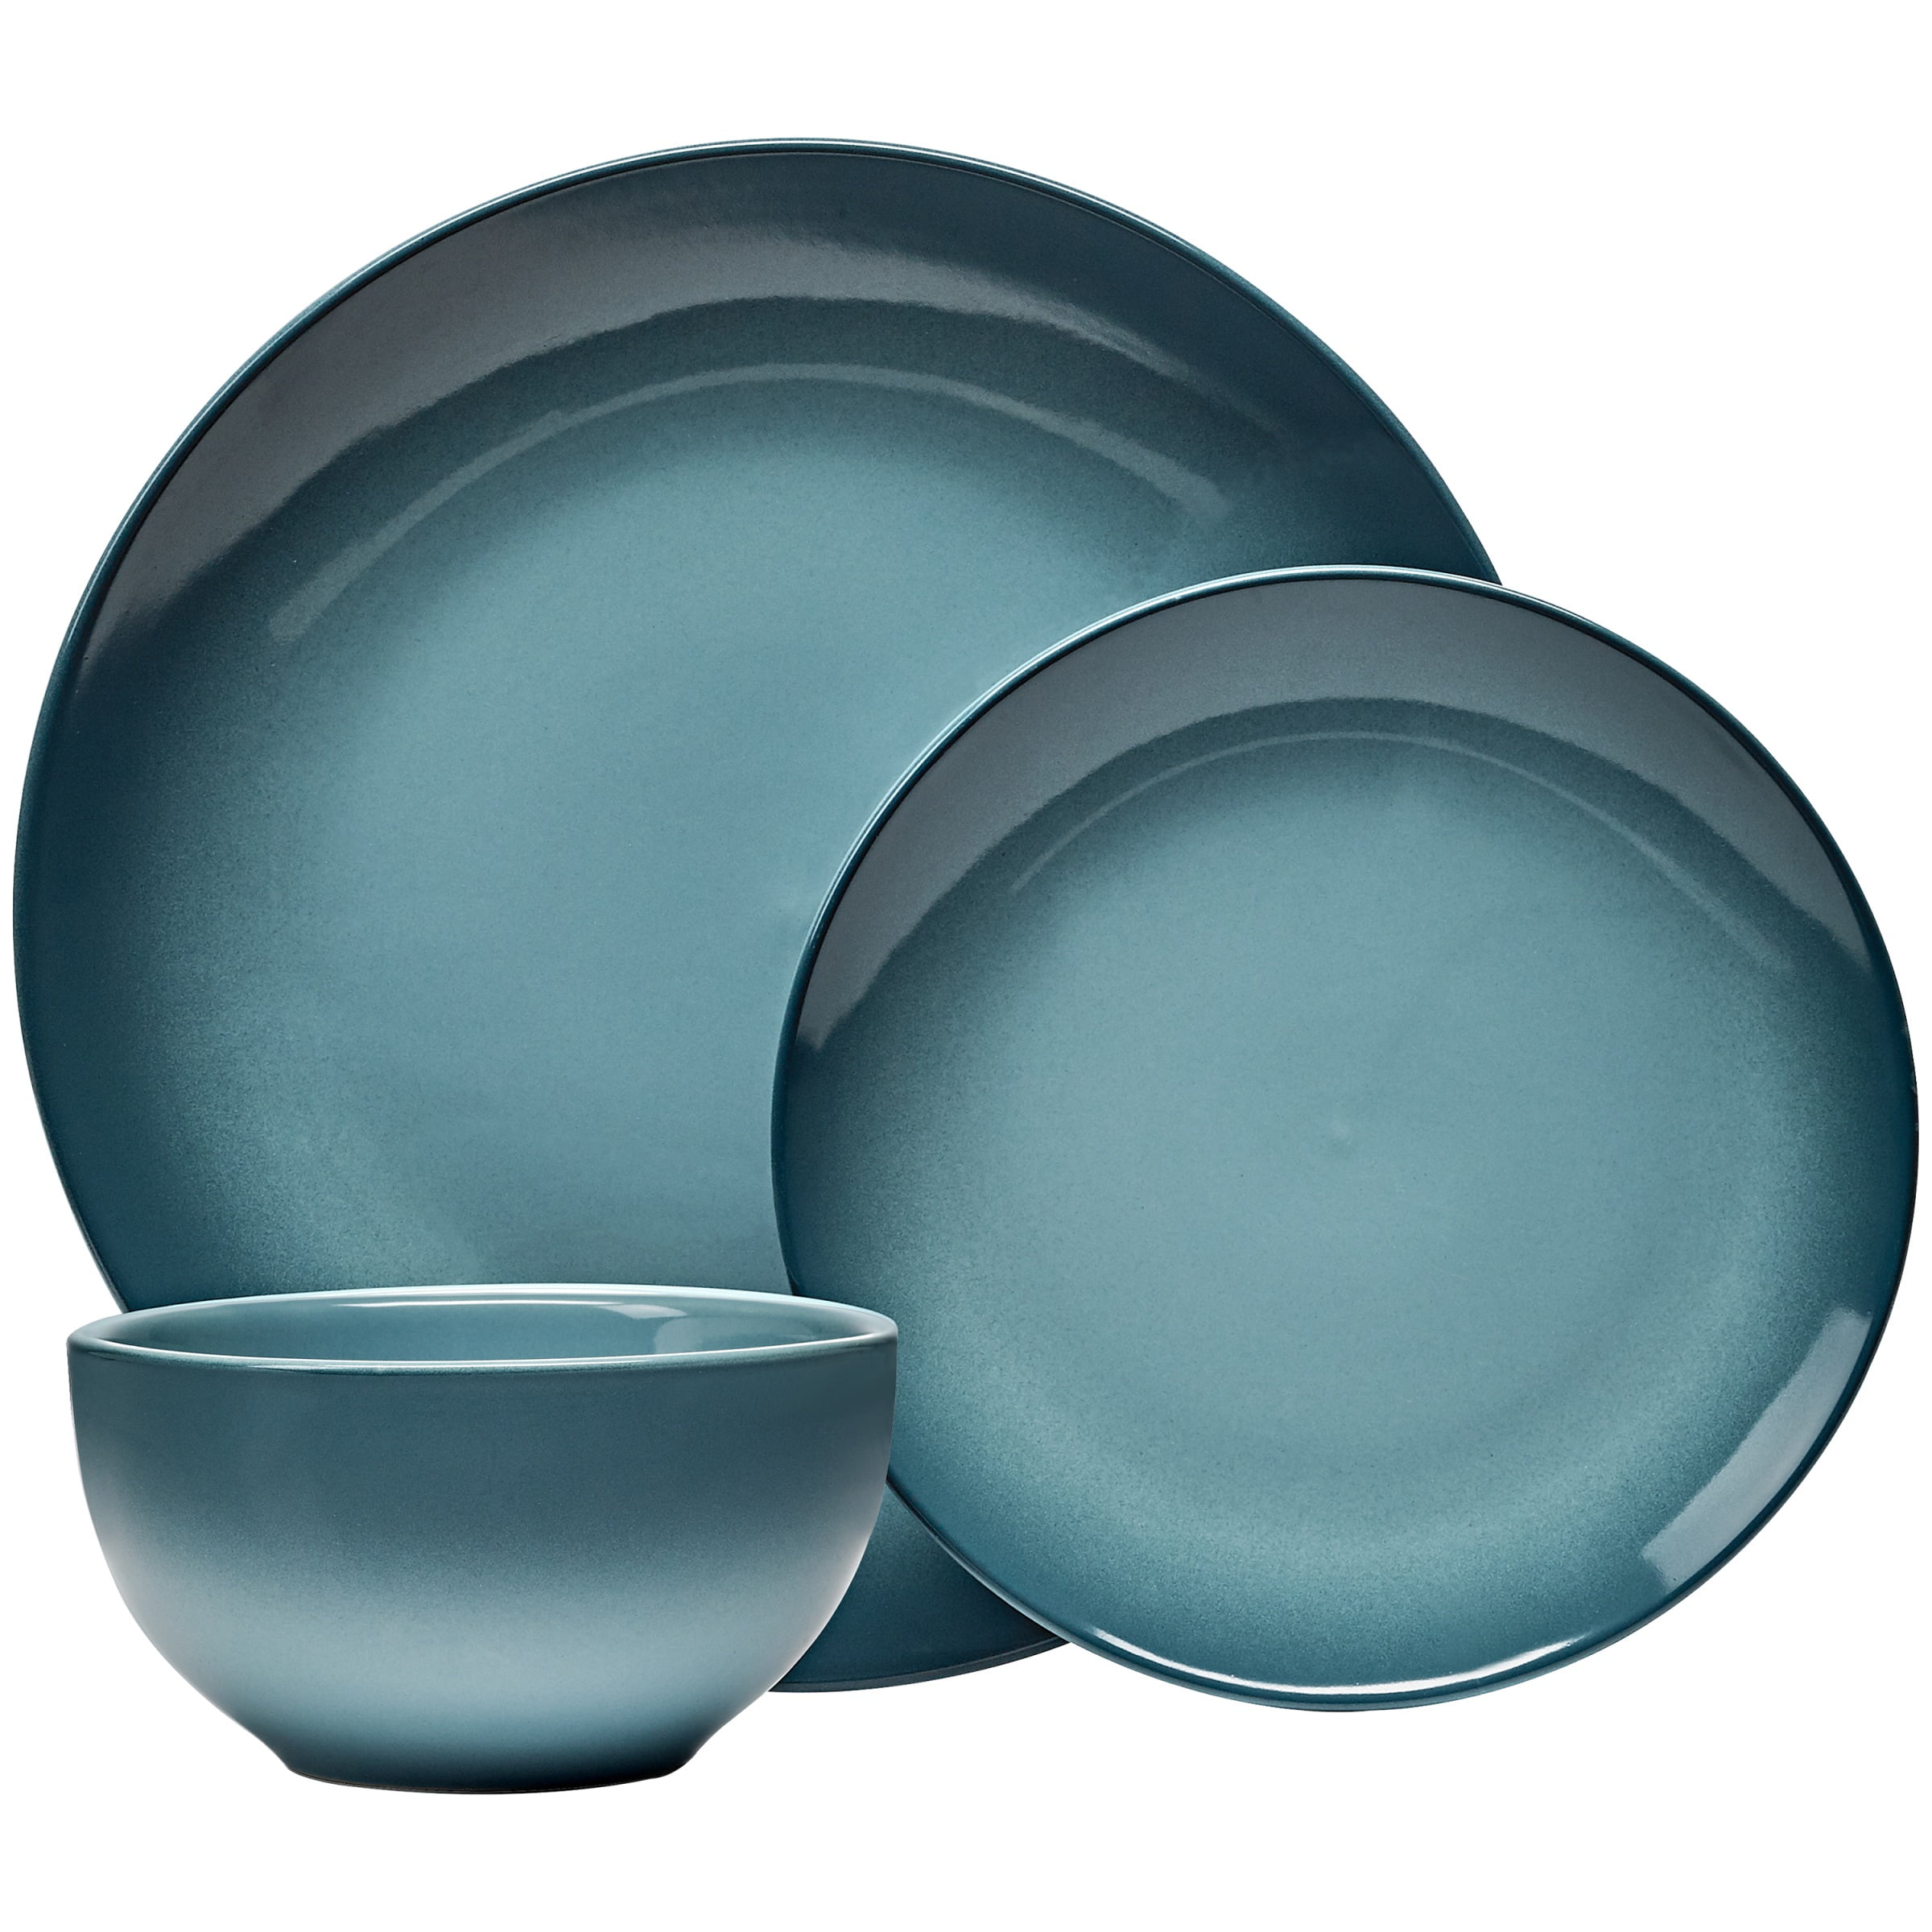 Kale Green Round Dinnerware Set 12 Piece Serve 4 Place Stoneware Dish Plates 